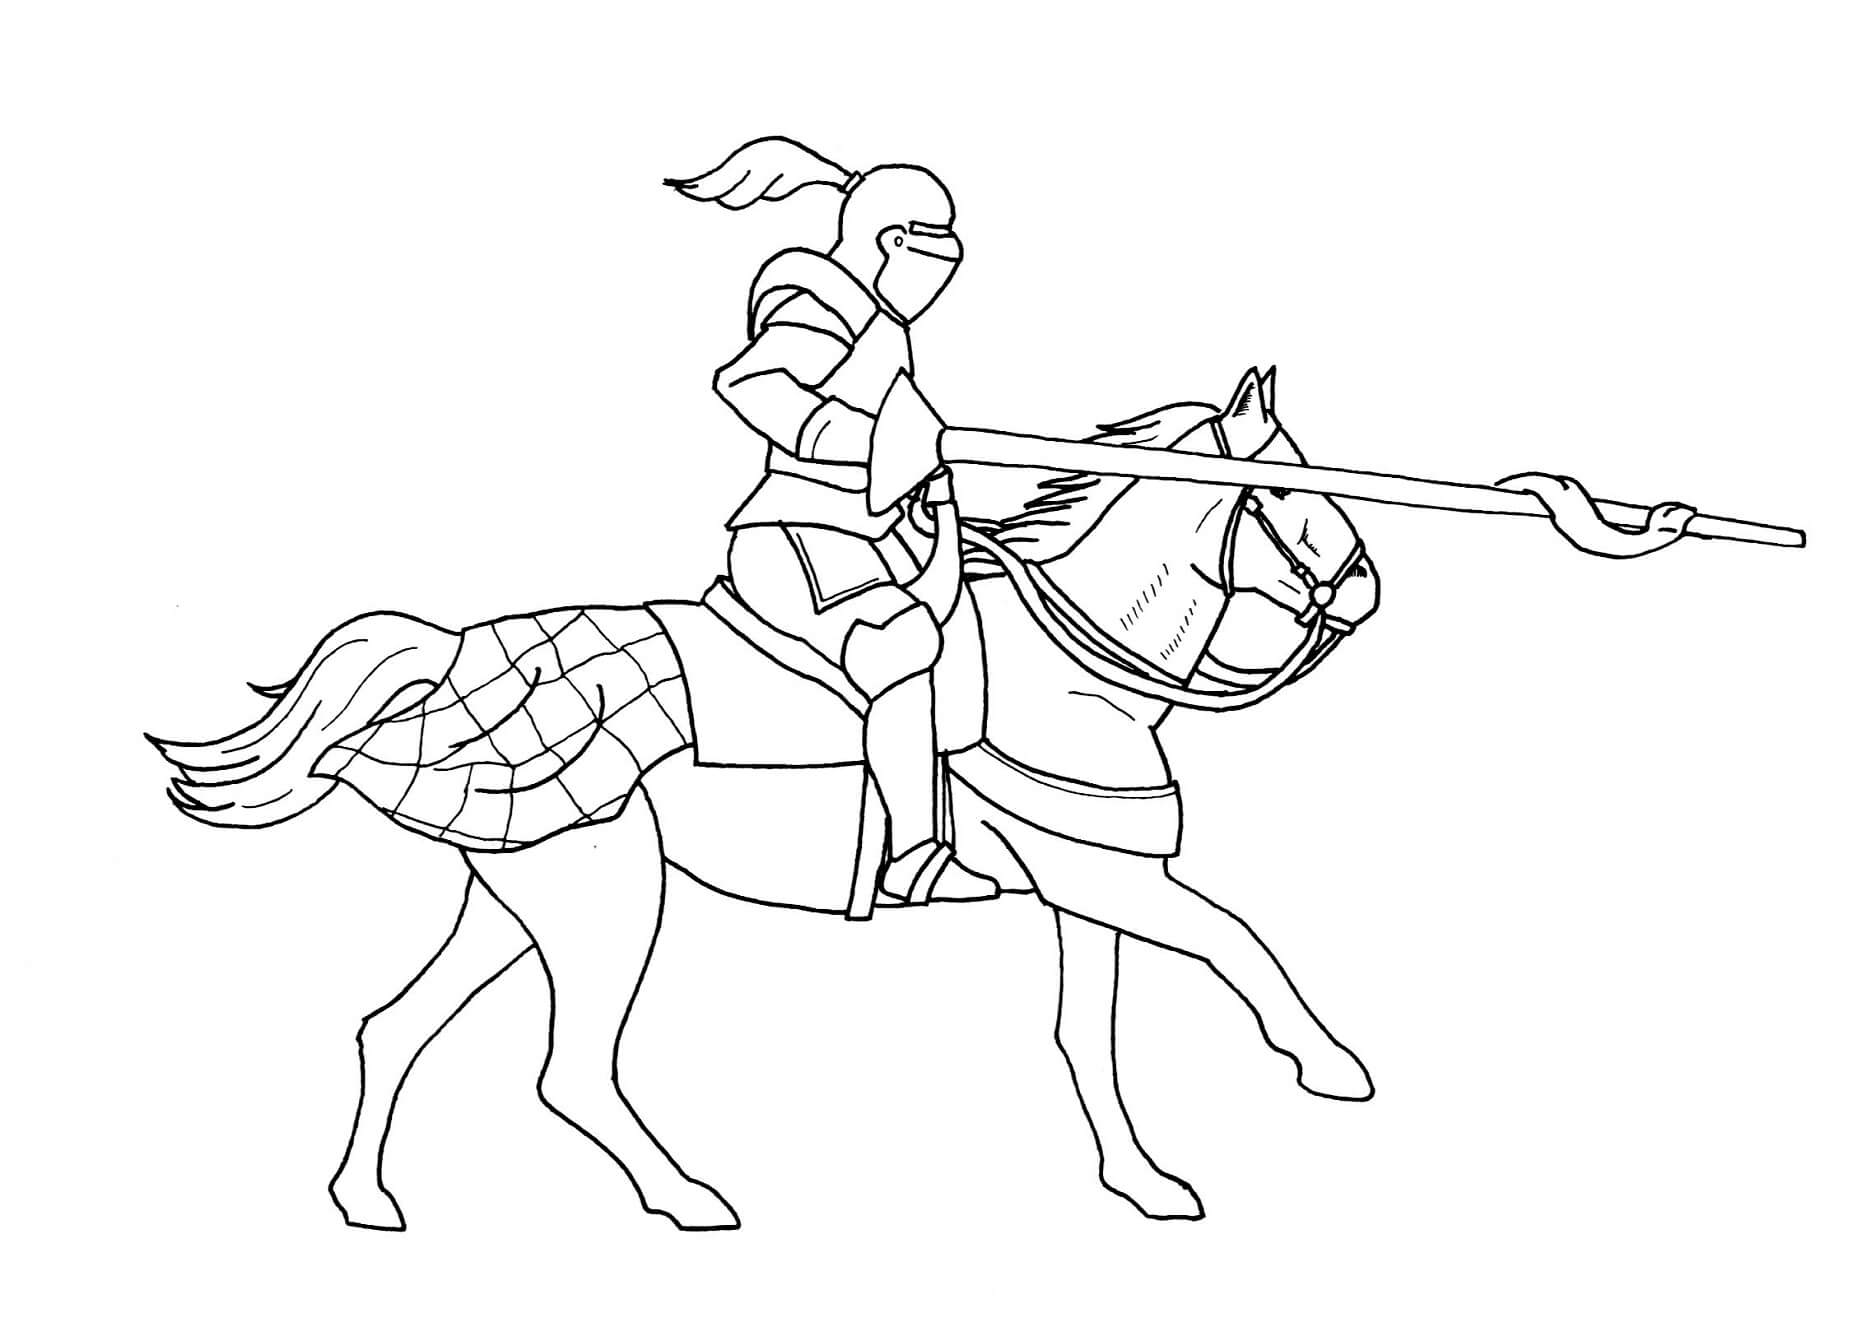 Desenhos de Incrível cavaleiro Andando a Cavalo para colorir